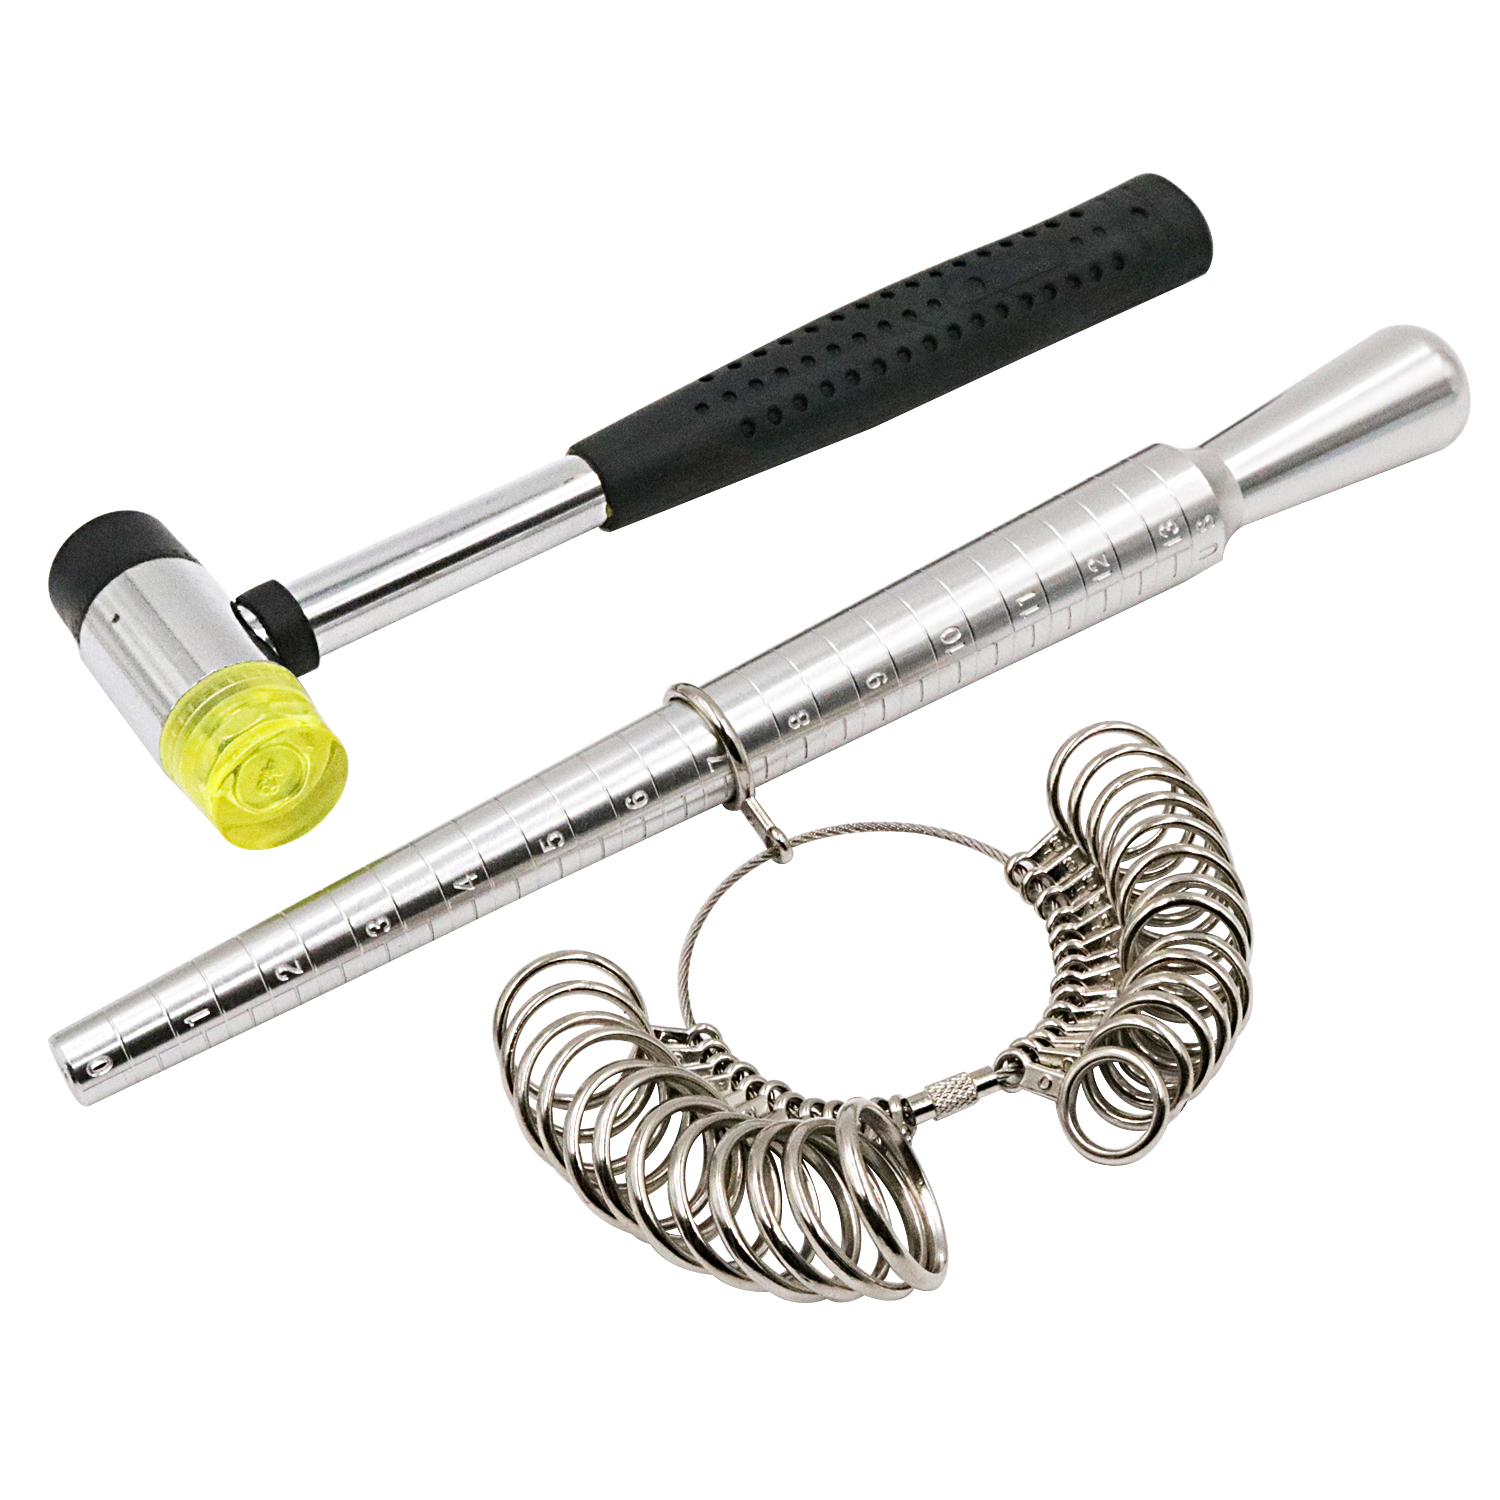 Ring Sizer Measuring Tool Set Including Ring Mandrel Metal Ring Sizer Gauge  Kit Rubber Jeweler's Mallet Hammer US Plug - AliExpress